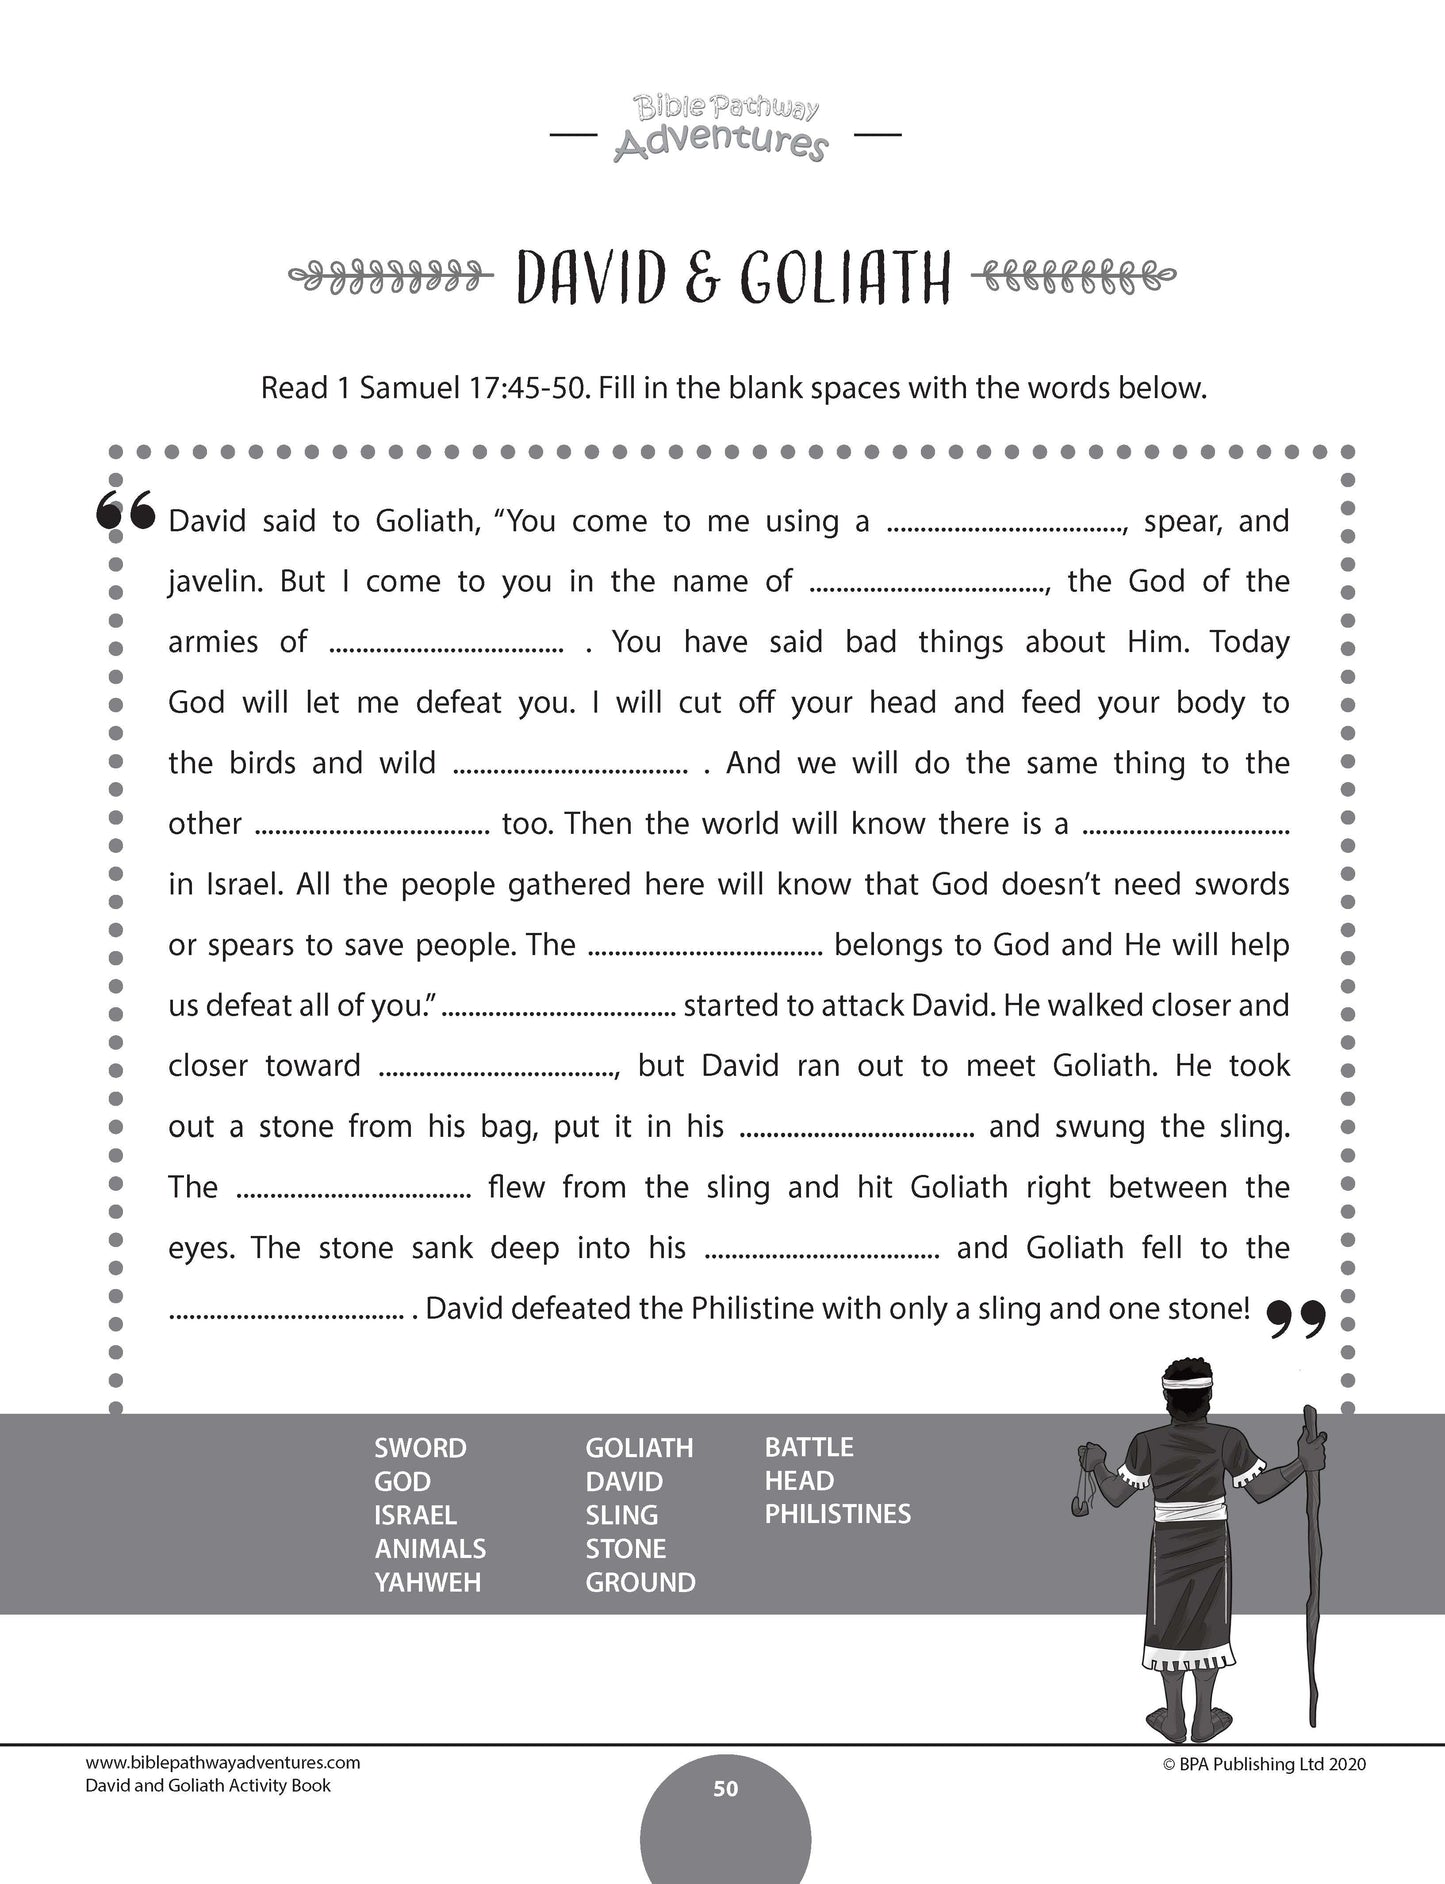 David and Goliath Activity Book